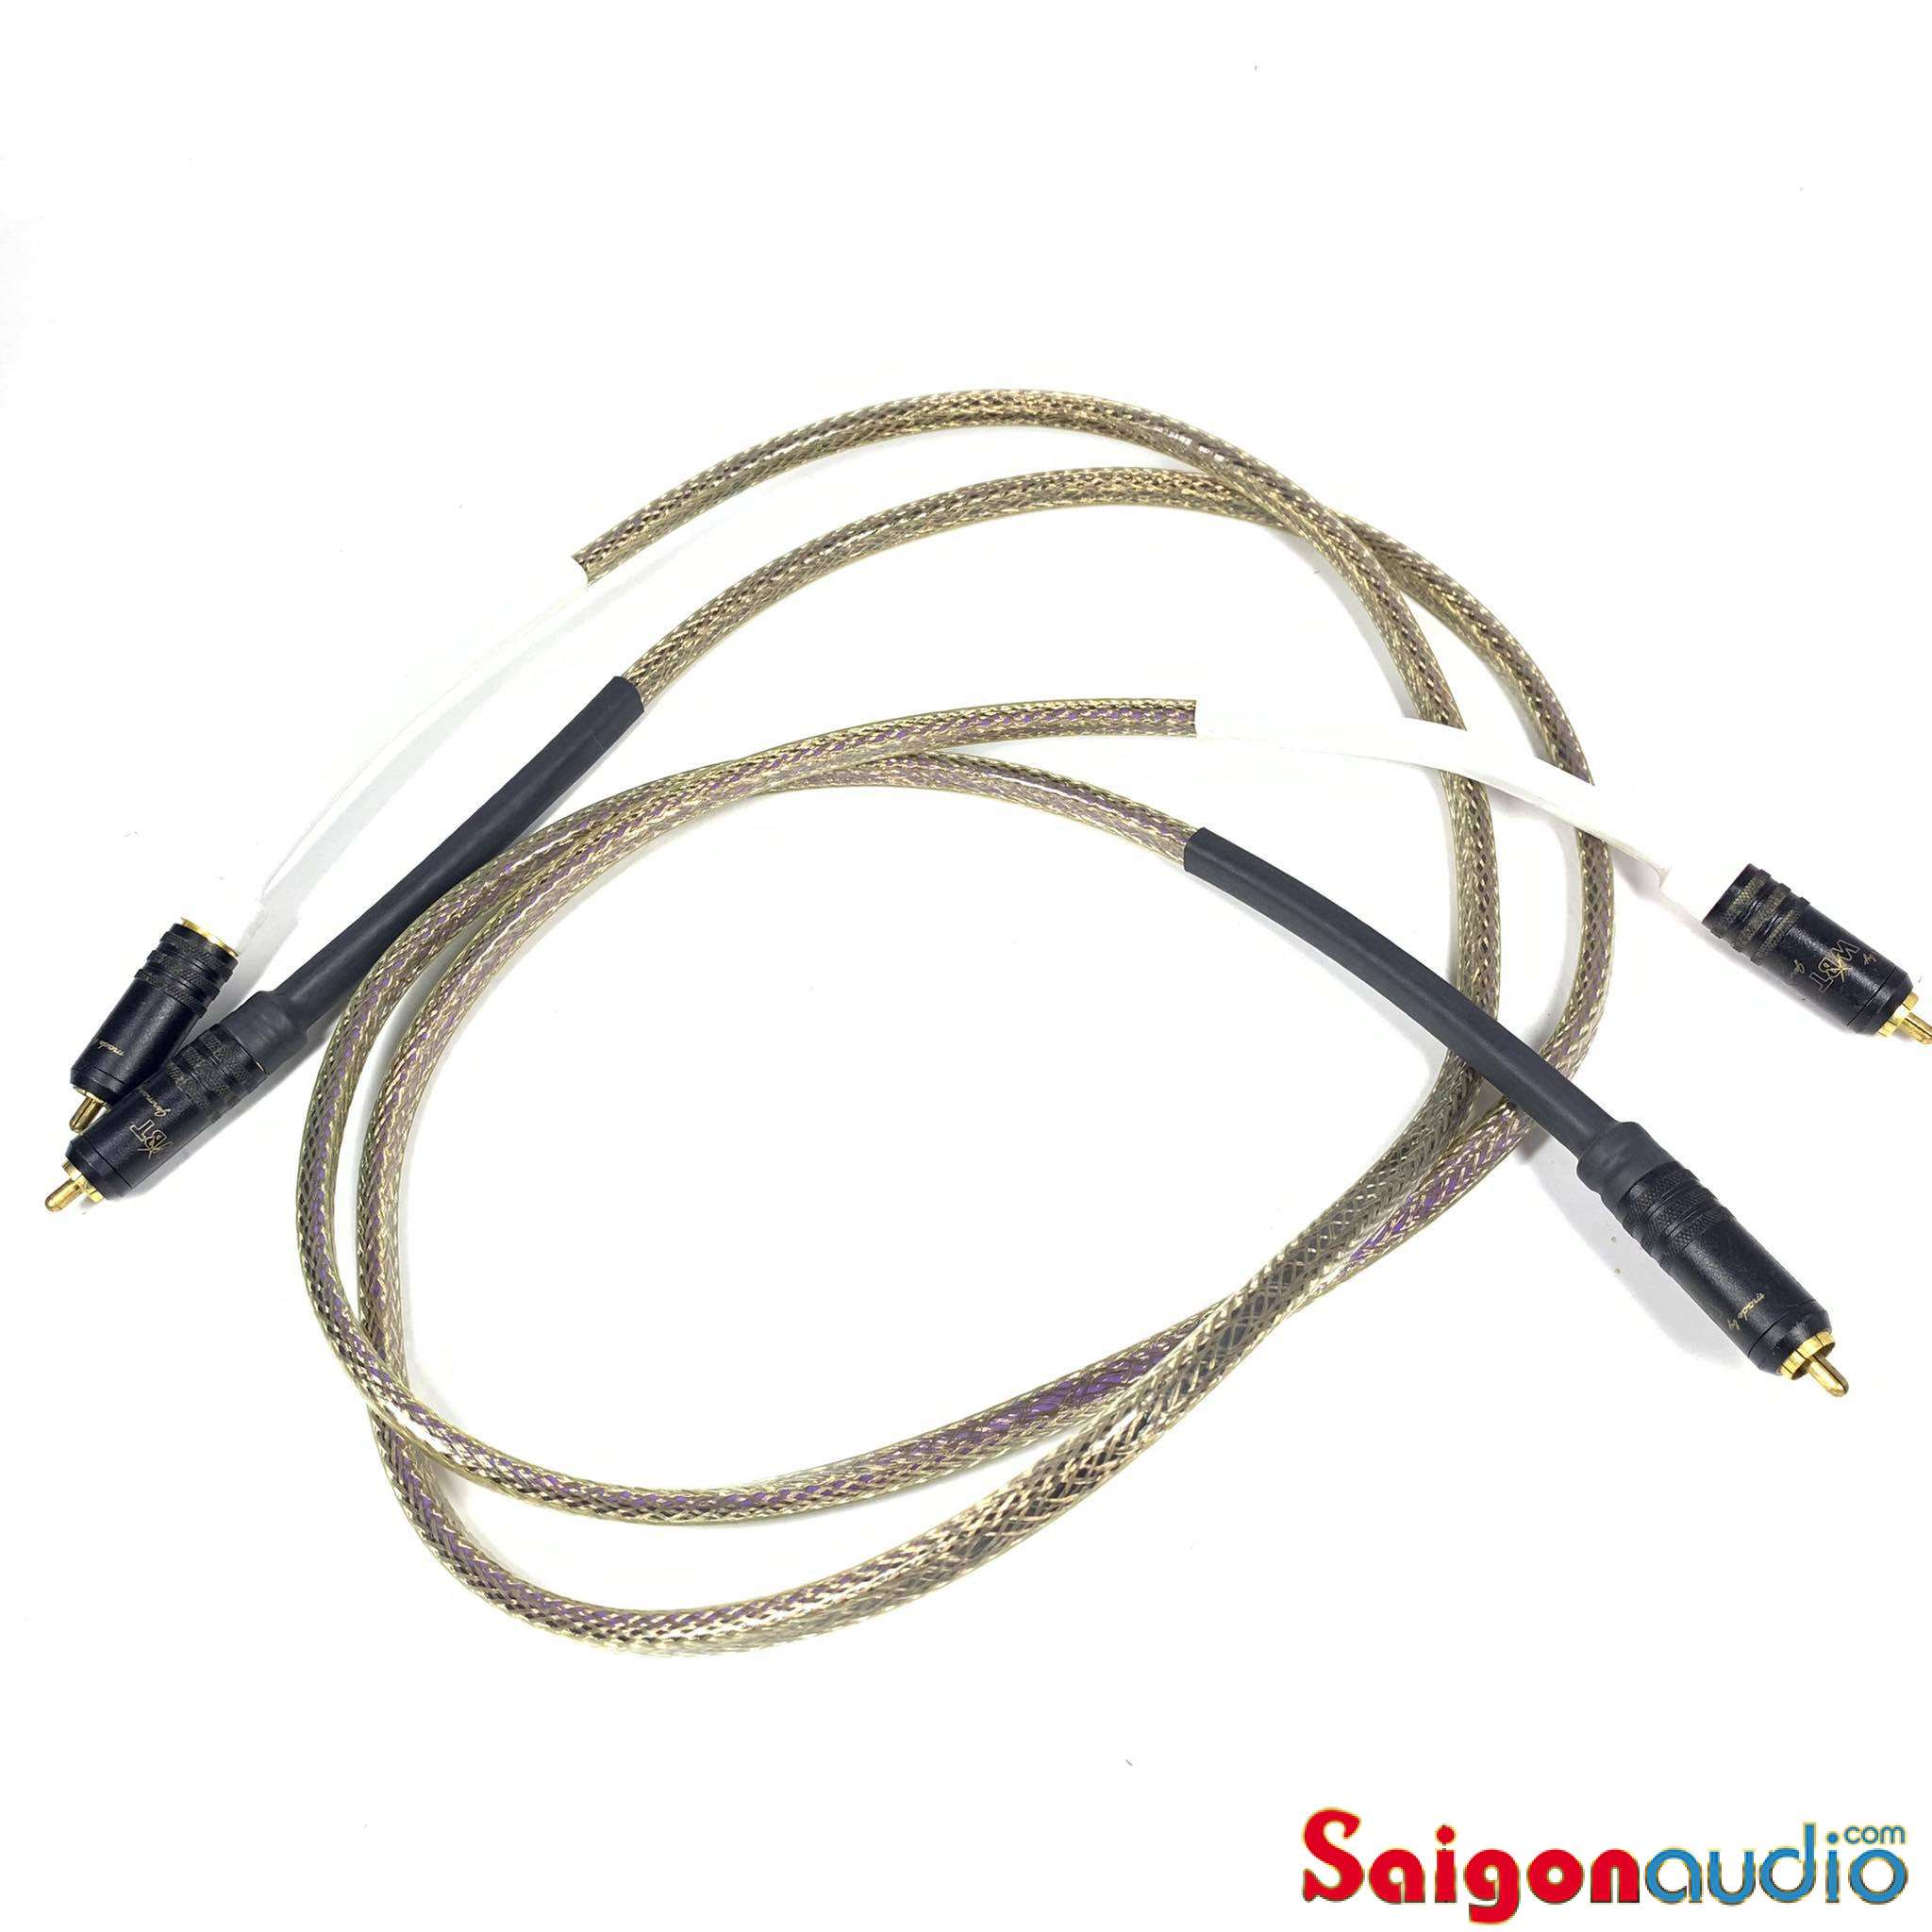 Length 0.5 Meter Analysis Plus Black Digital Cable RCA-RCA 